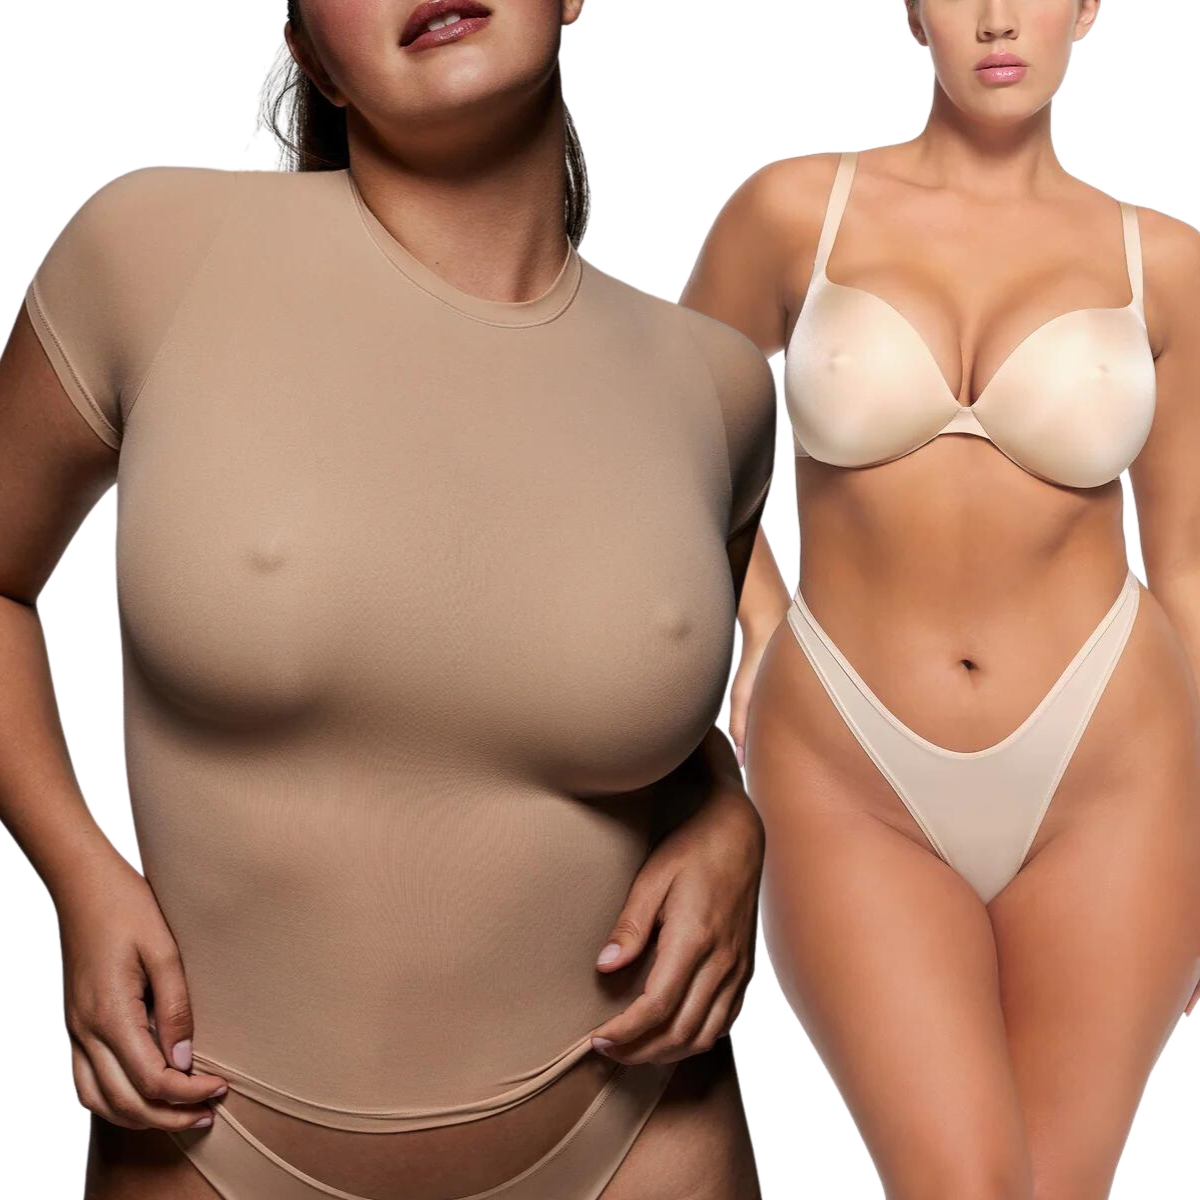 Do we like the @SKIMS nipple bra? 😅 #skimspaddedbra #skimsnipbra